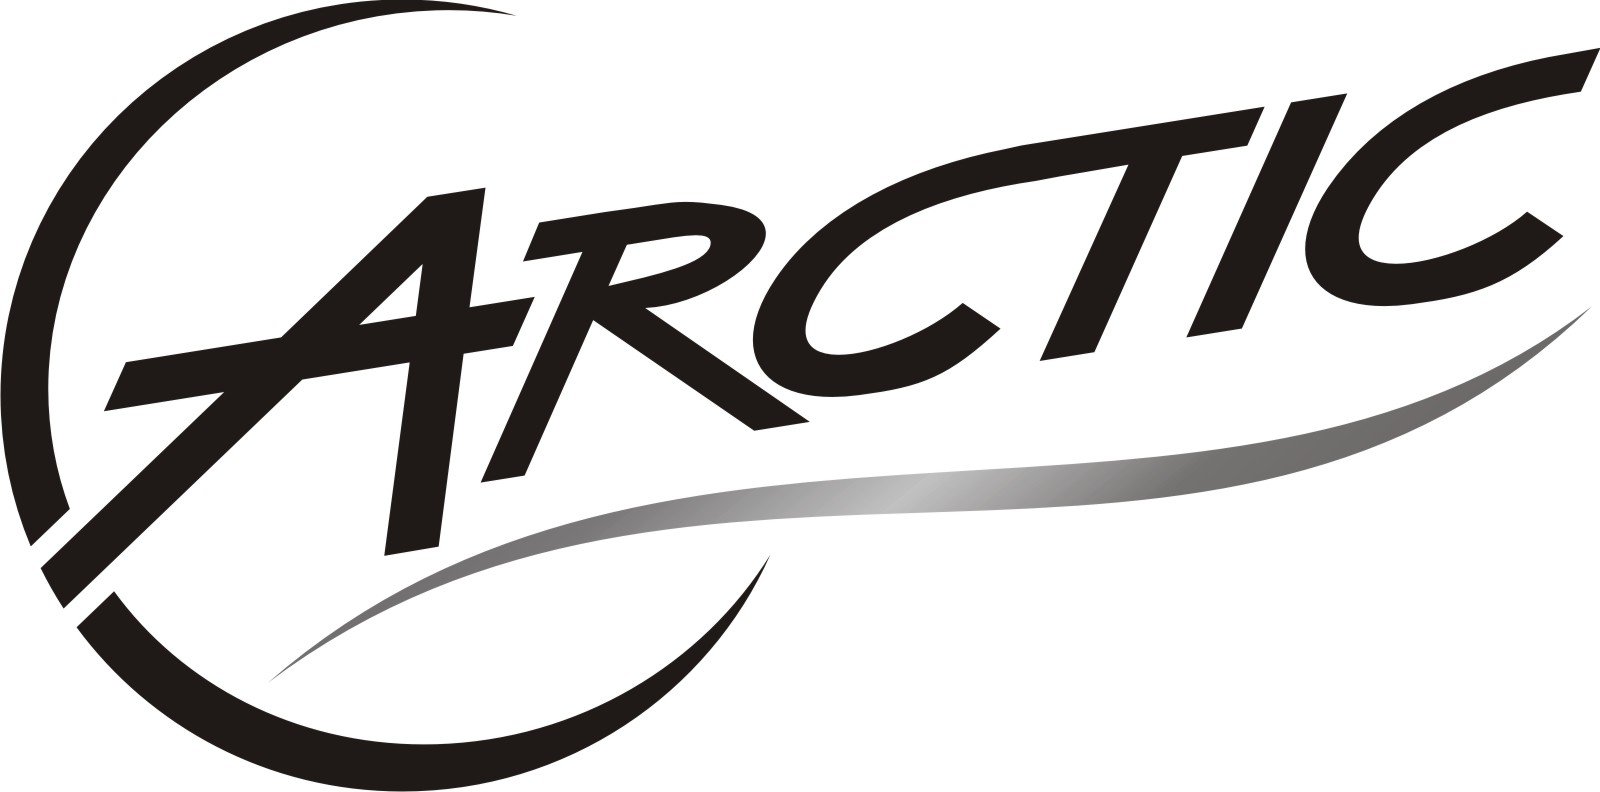 Arctic-Logo